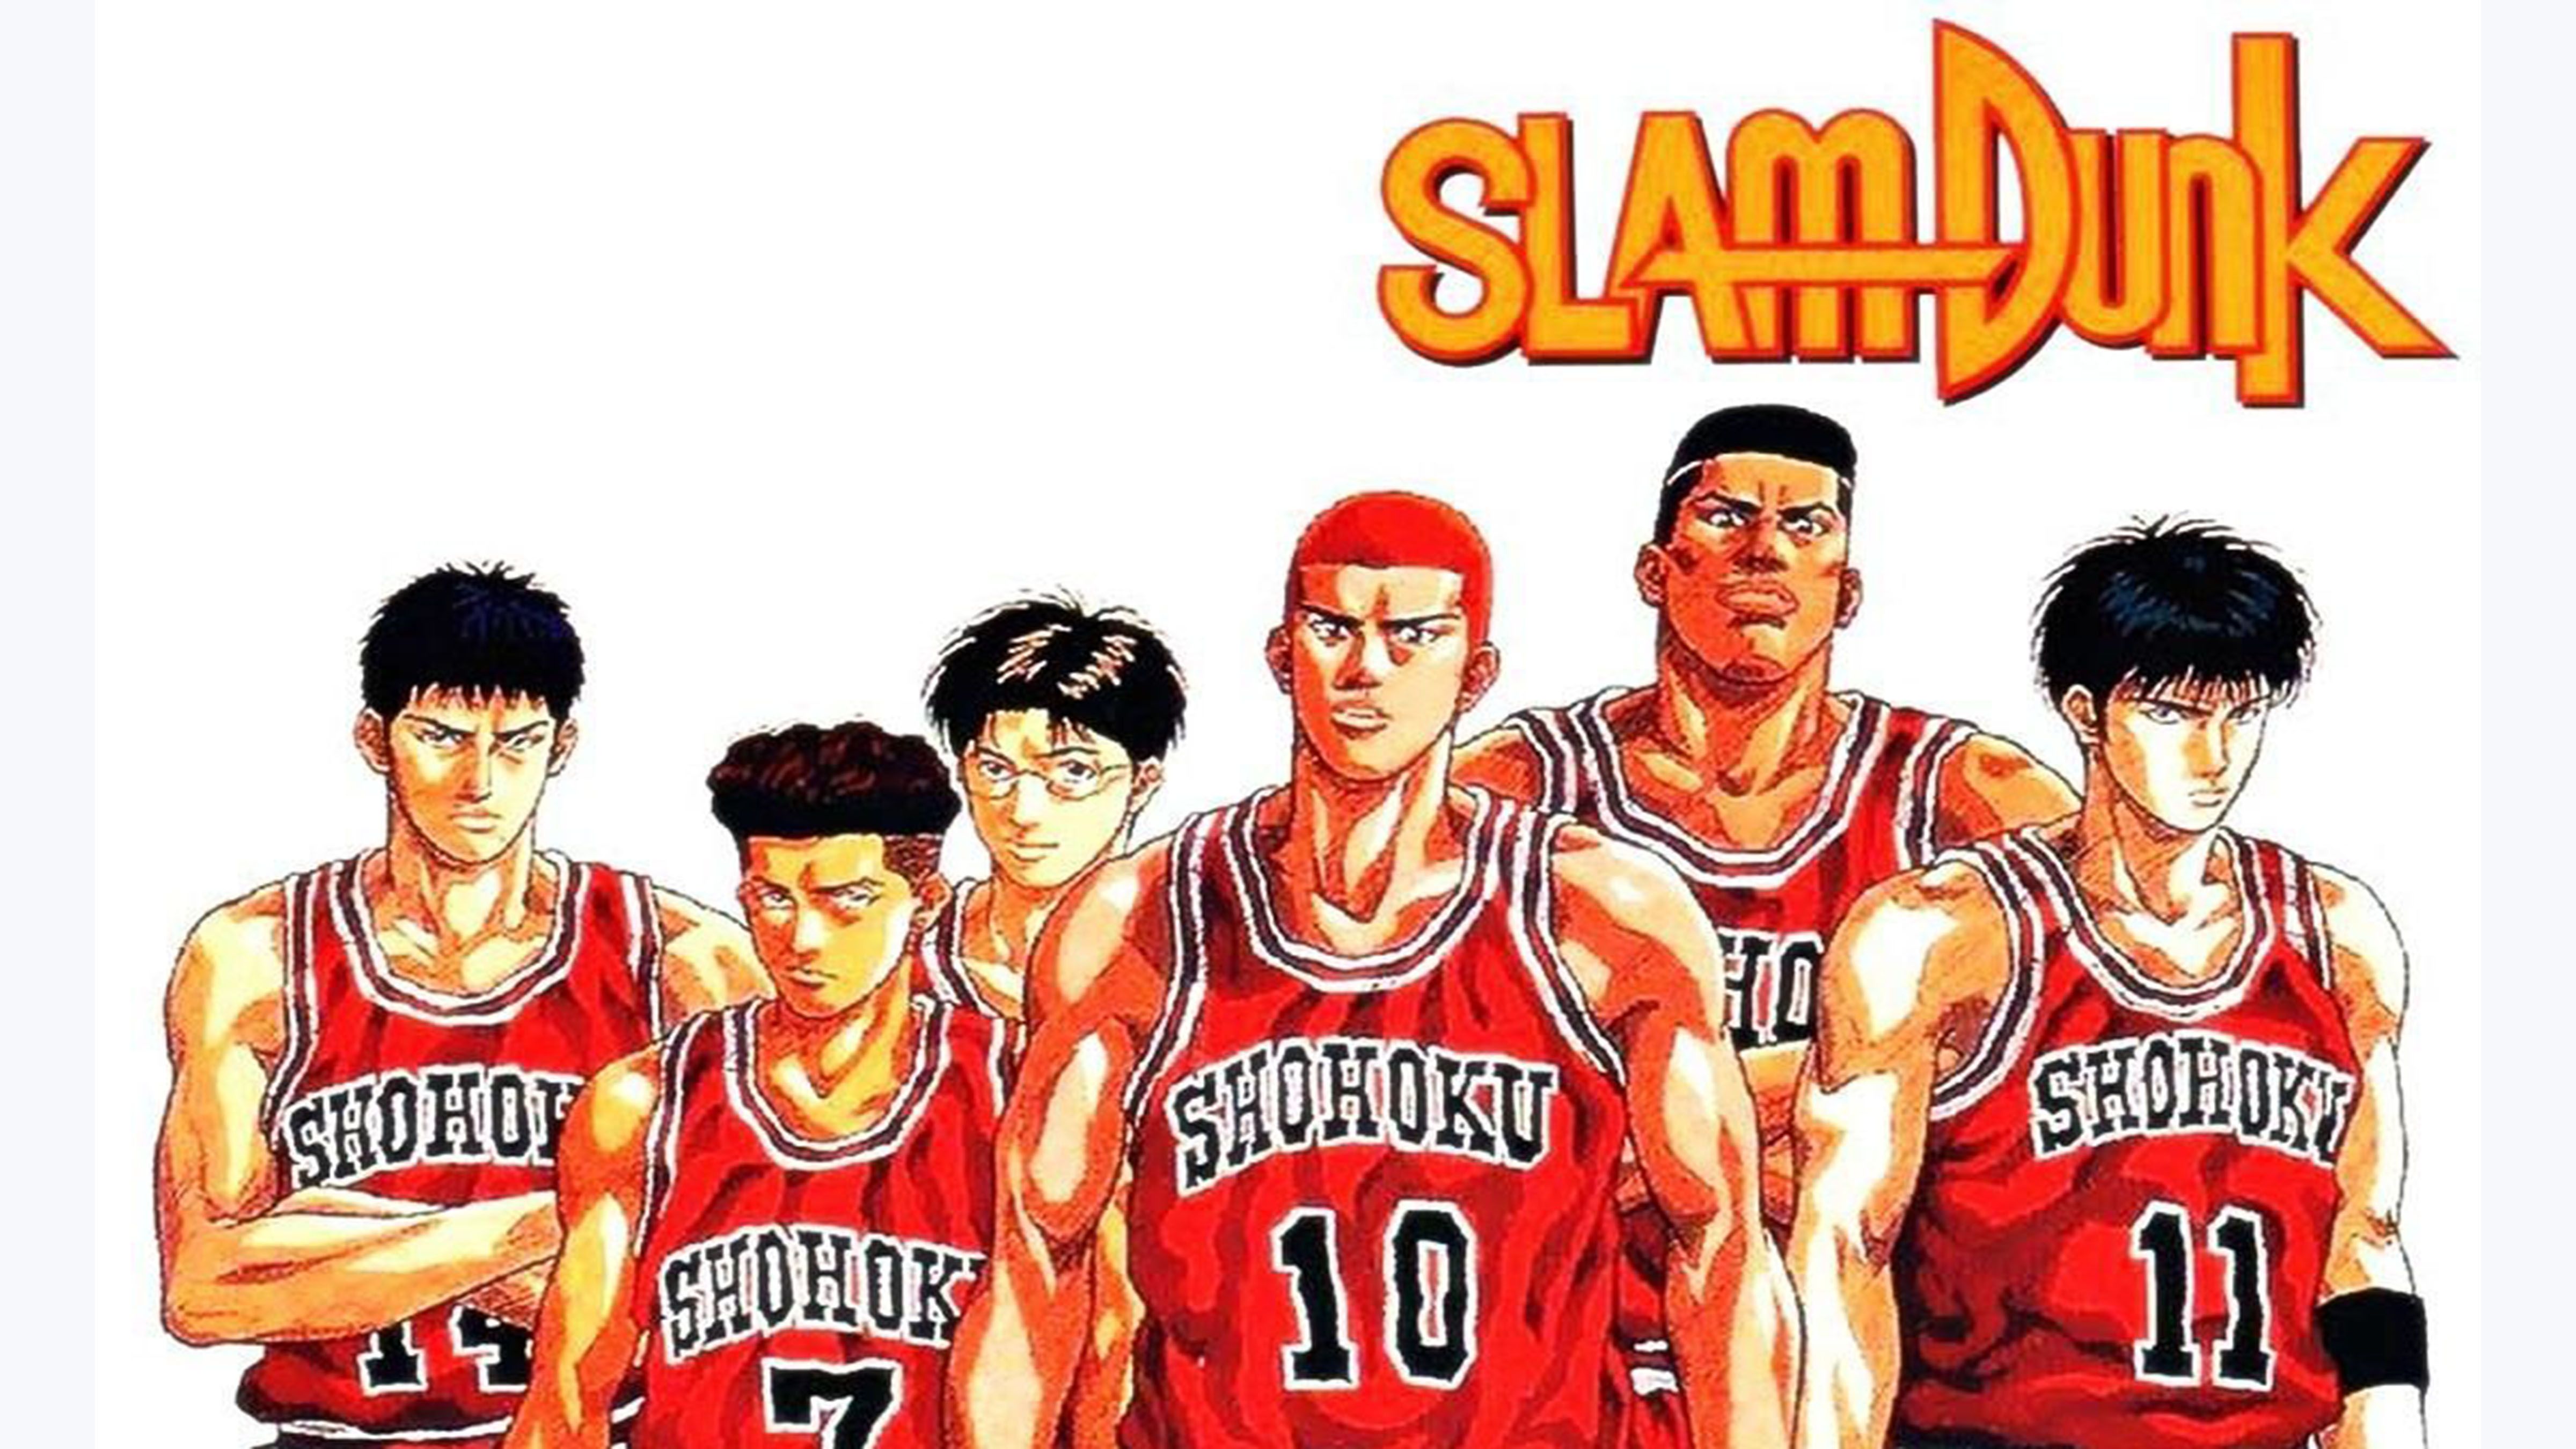 Classic anime series ‘Slam Dunk’ gets movie remake photo from Mundo Comics